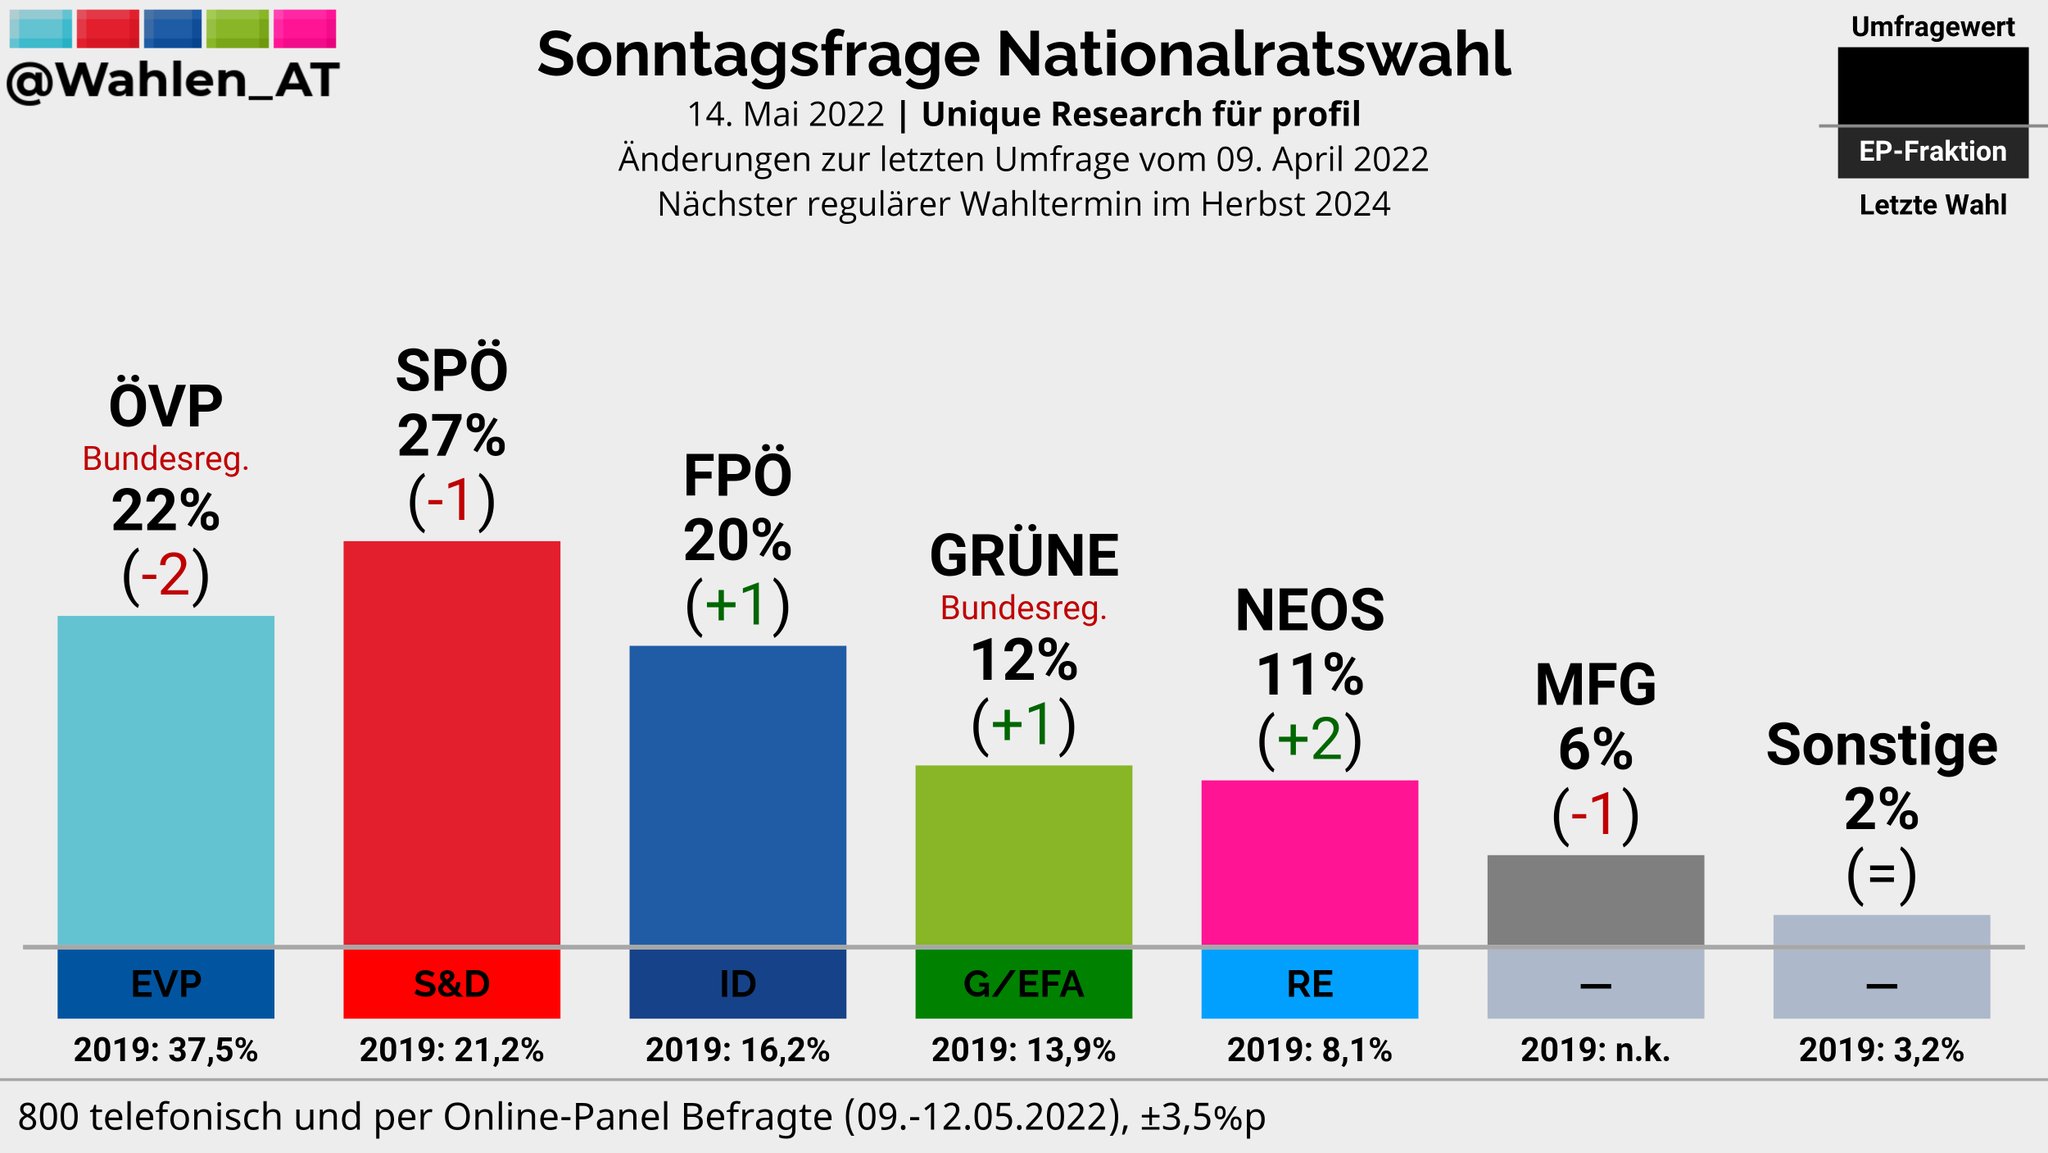 Wer wählt die FPÖ?